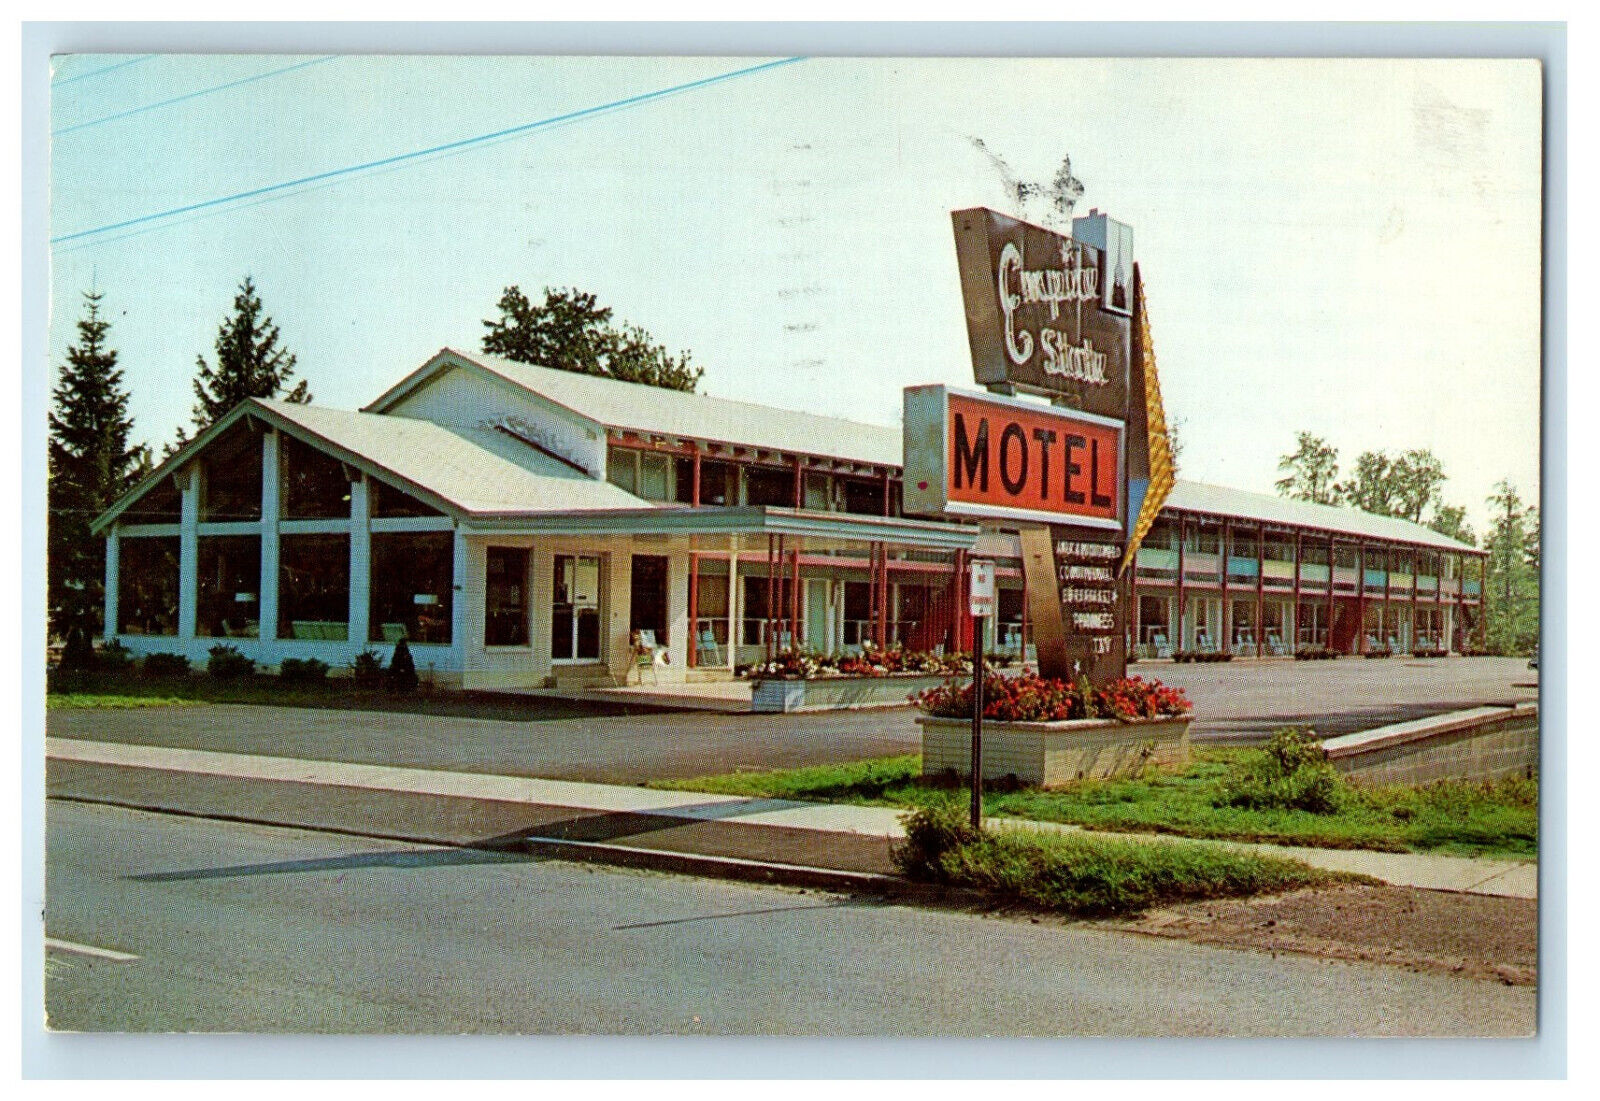 1966 1606 Central Ave. Empire State Motel Albany New York NY Cancel Postcard